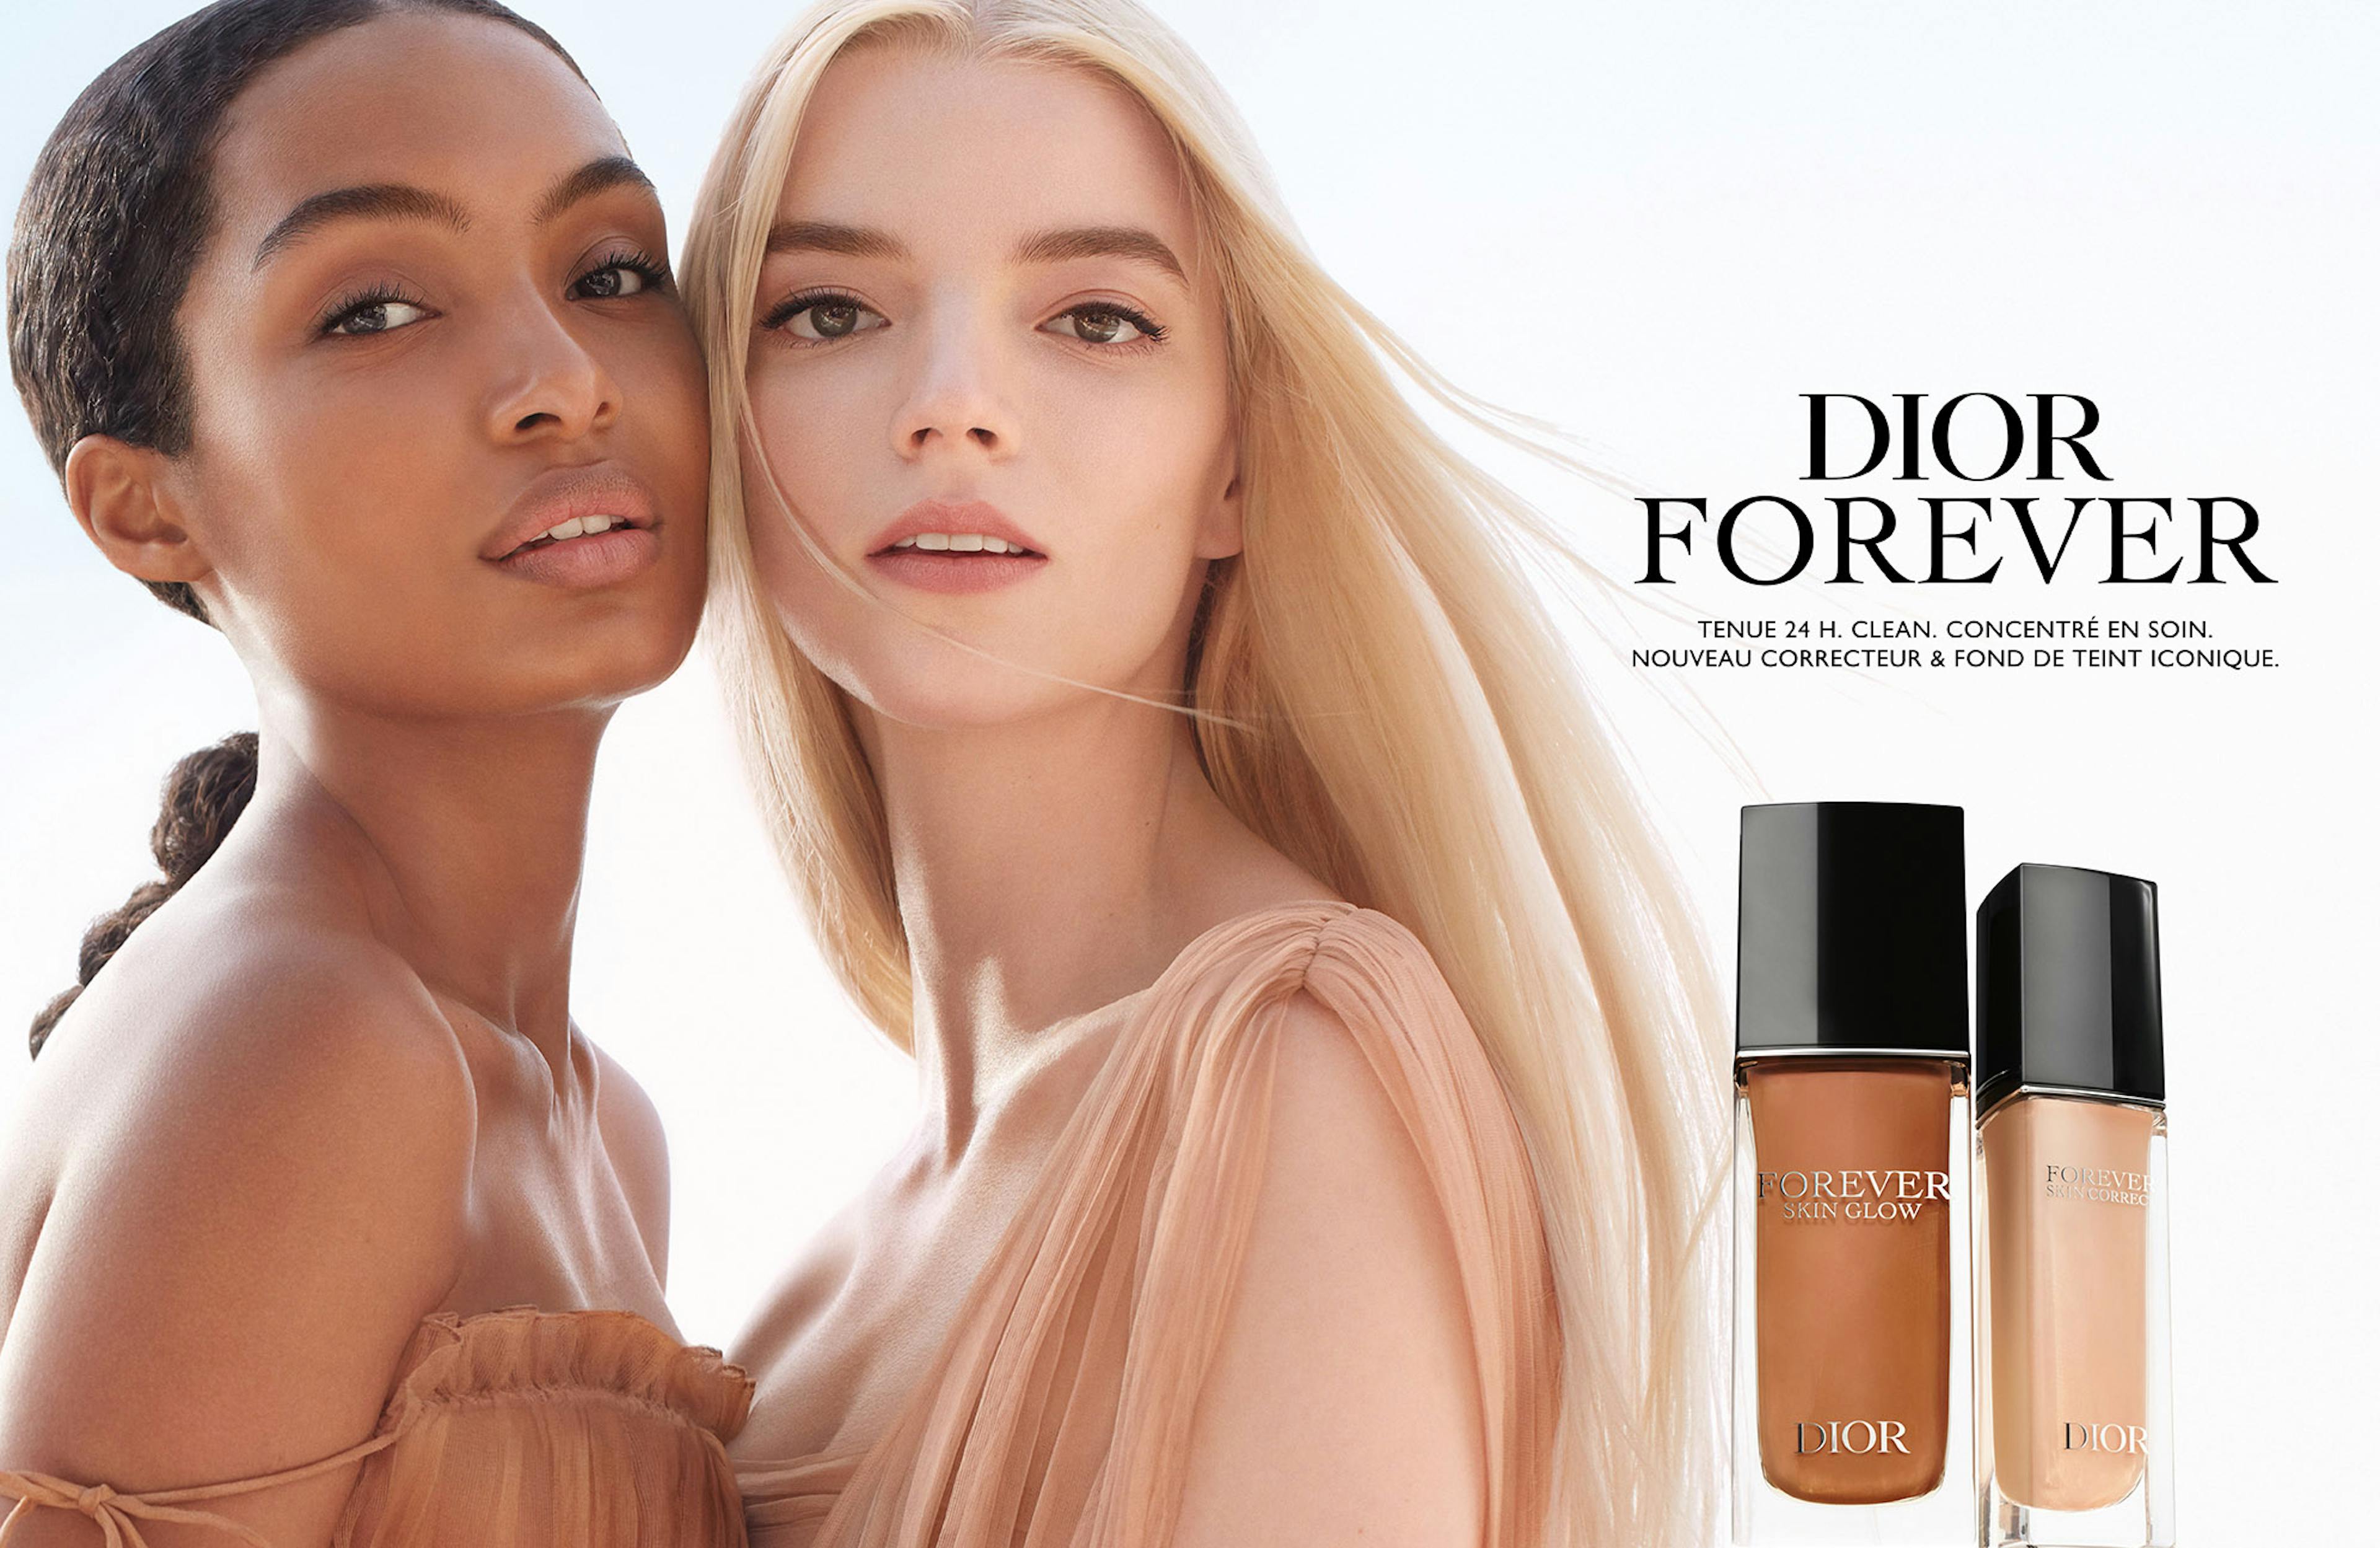 DIOR FOREVER © Parfums Christian Dior